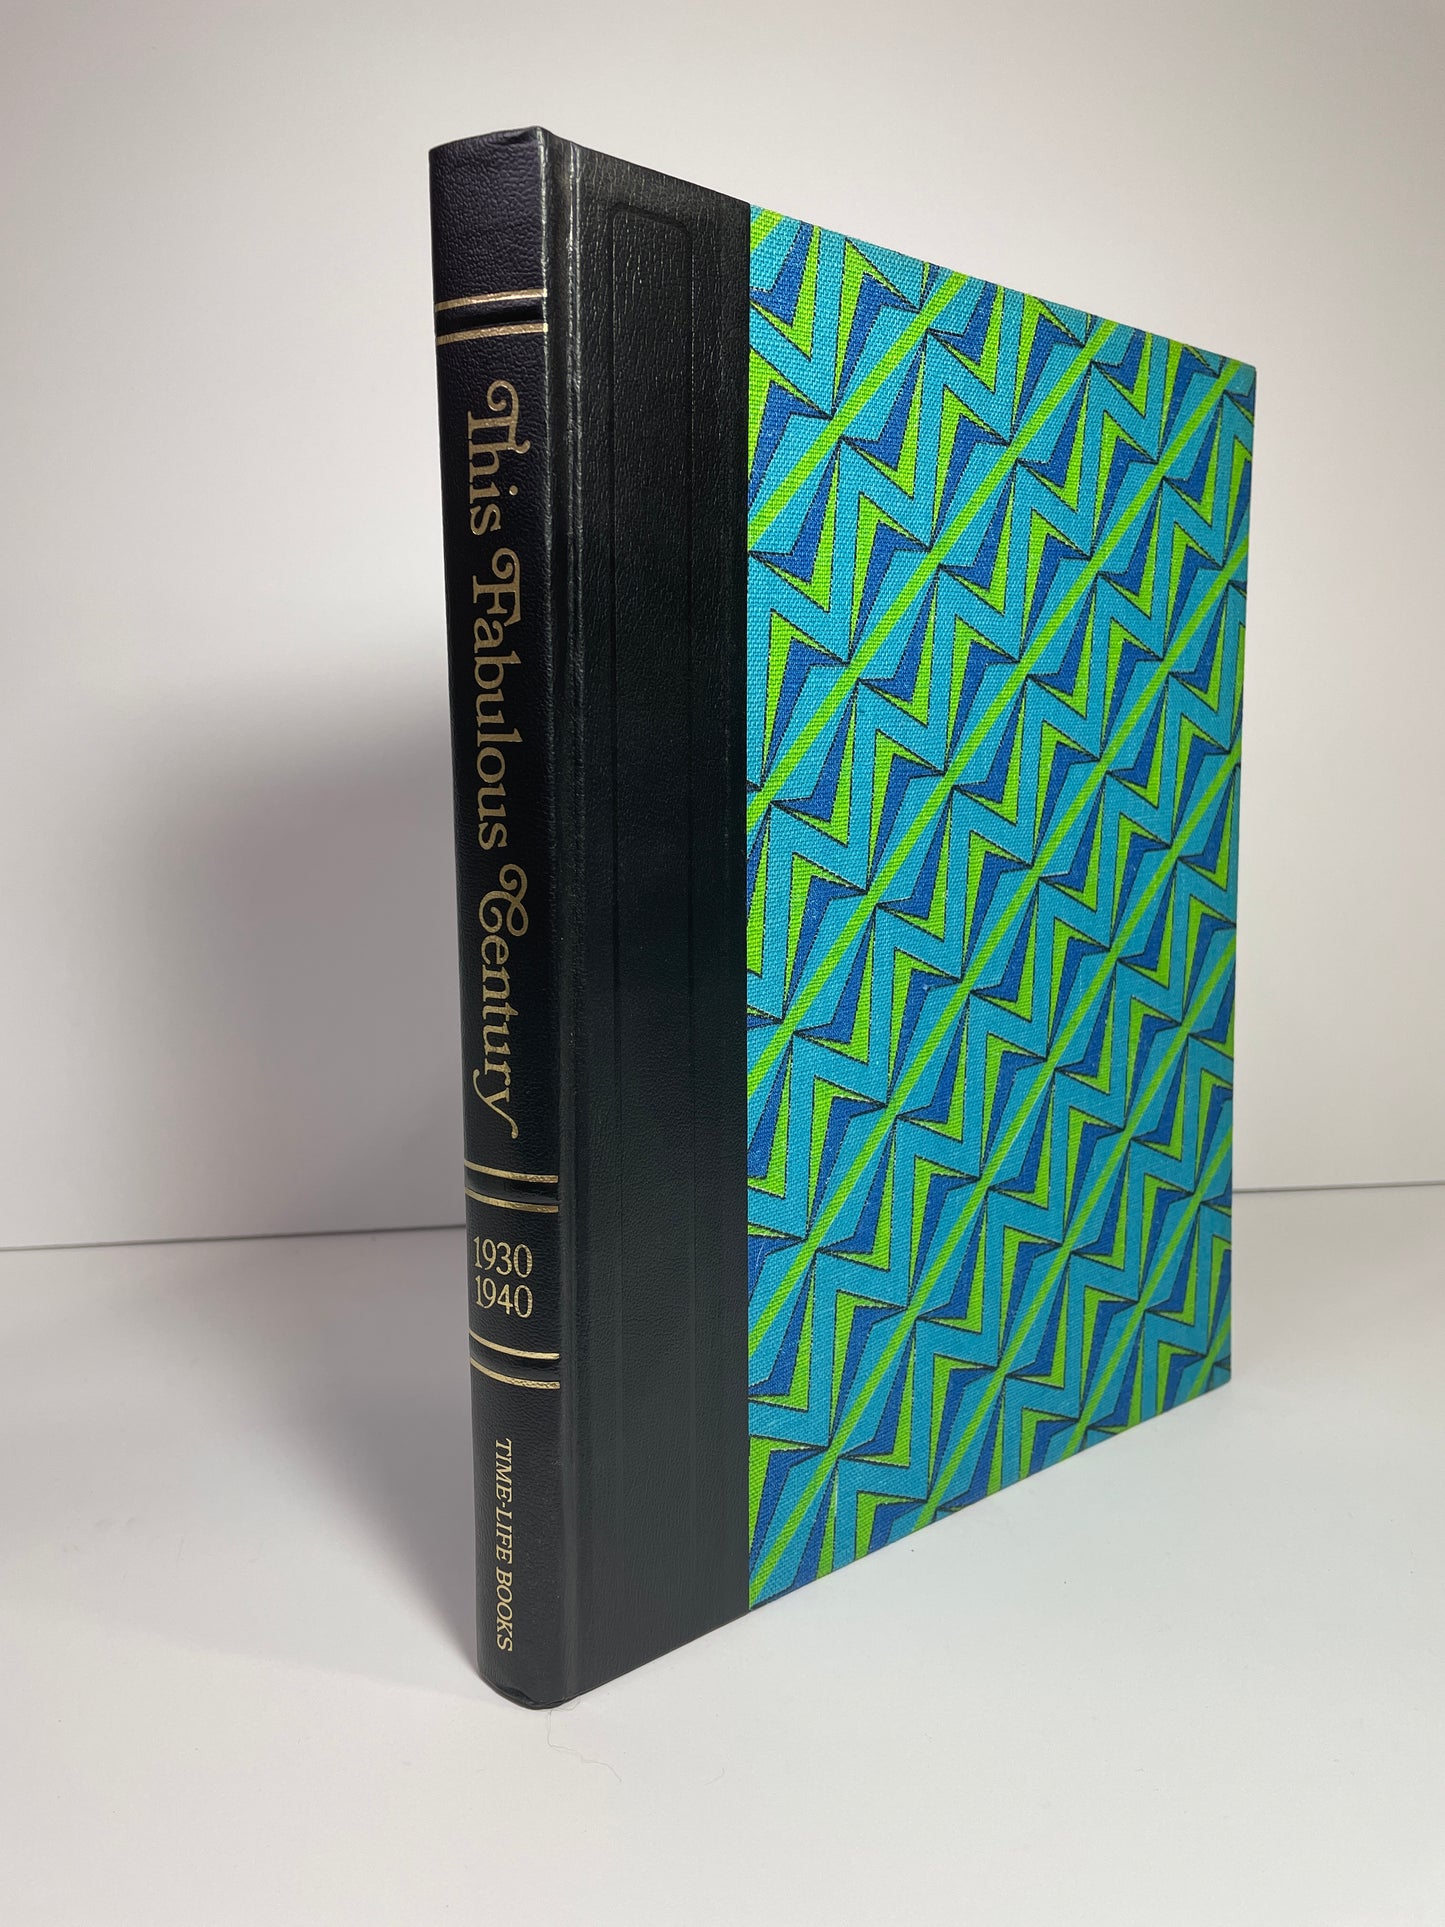 This Fabulous Century 8 Volume Set (1870-1970)